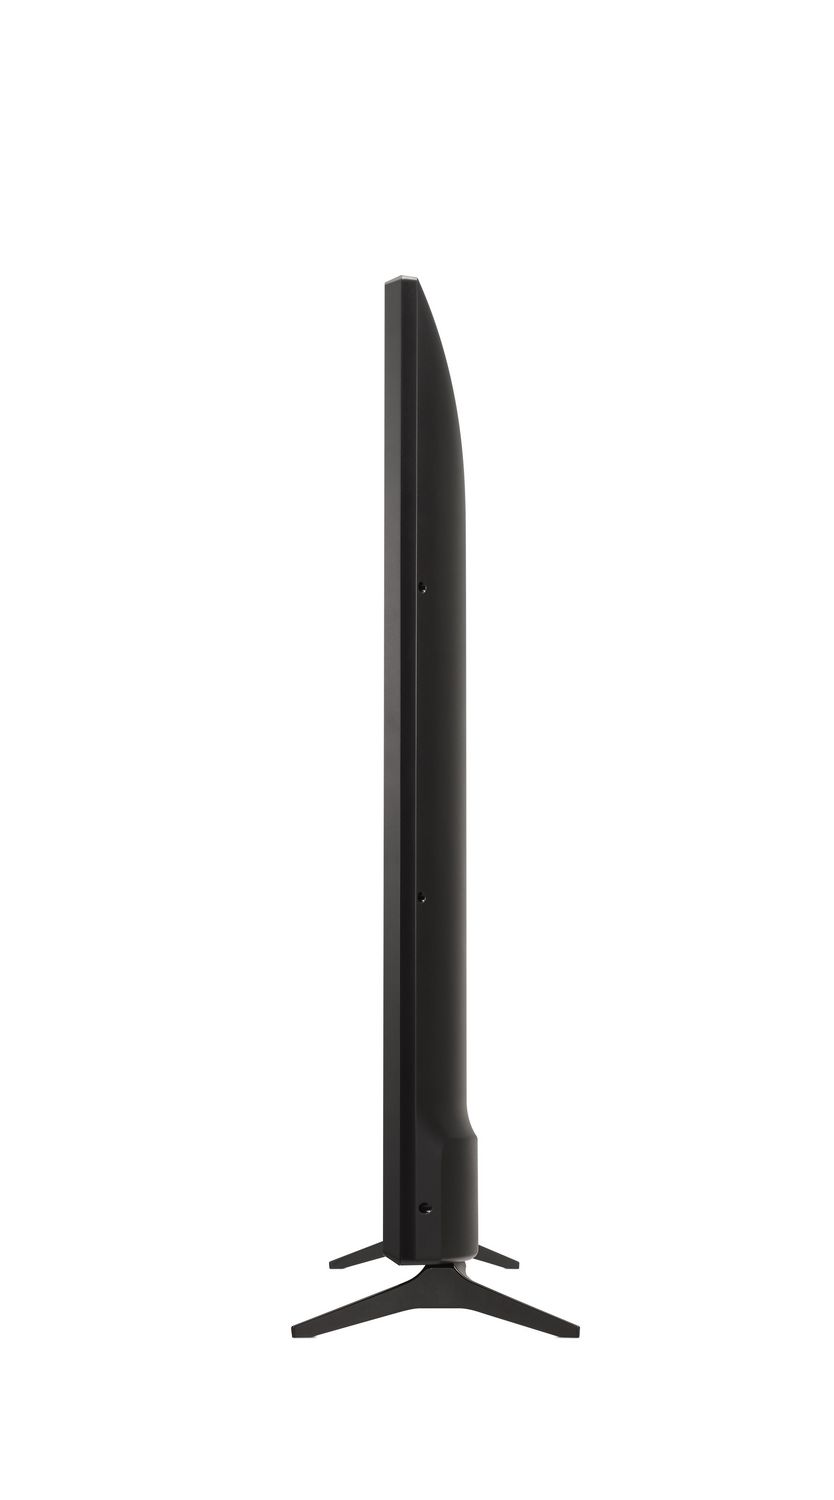 LG 49UJ6300 4K UHD Smart LED TV with WebOS 3.5 - Walmart.ca